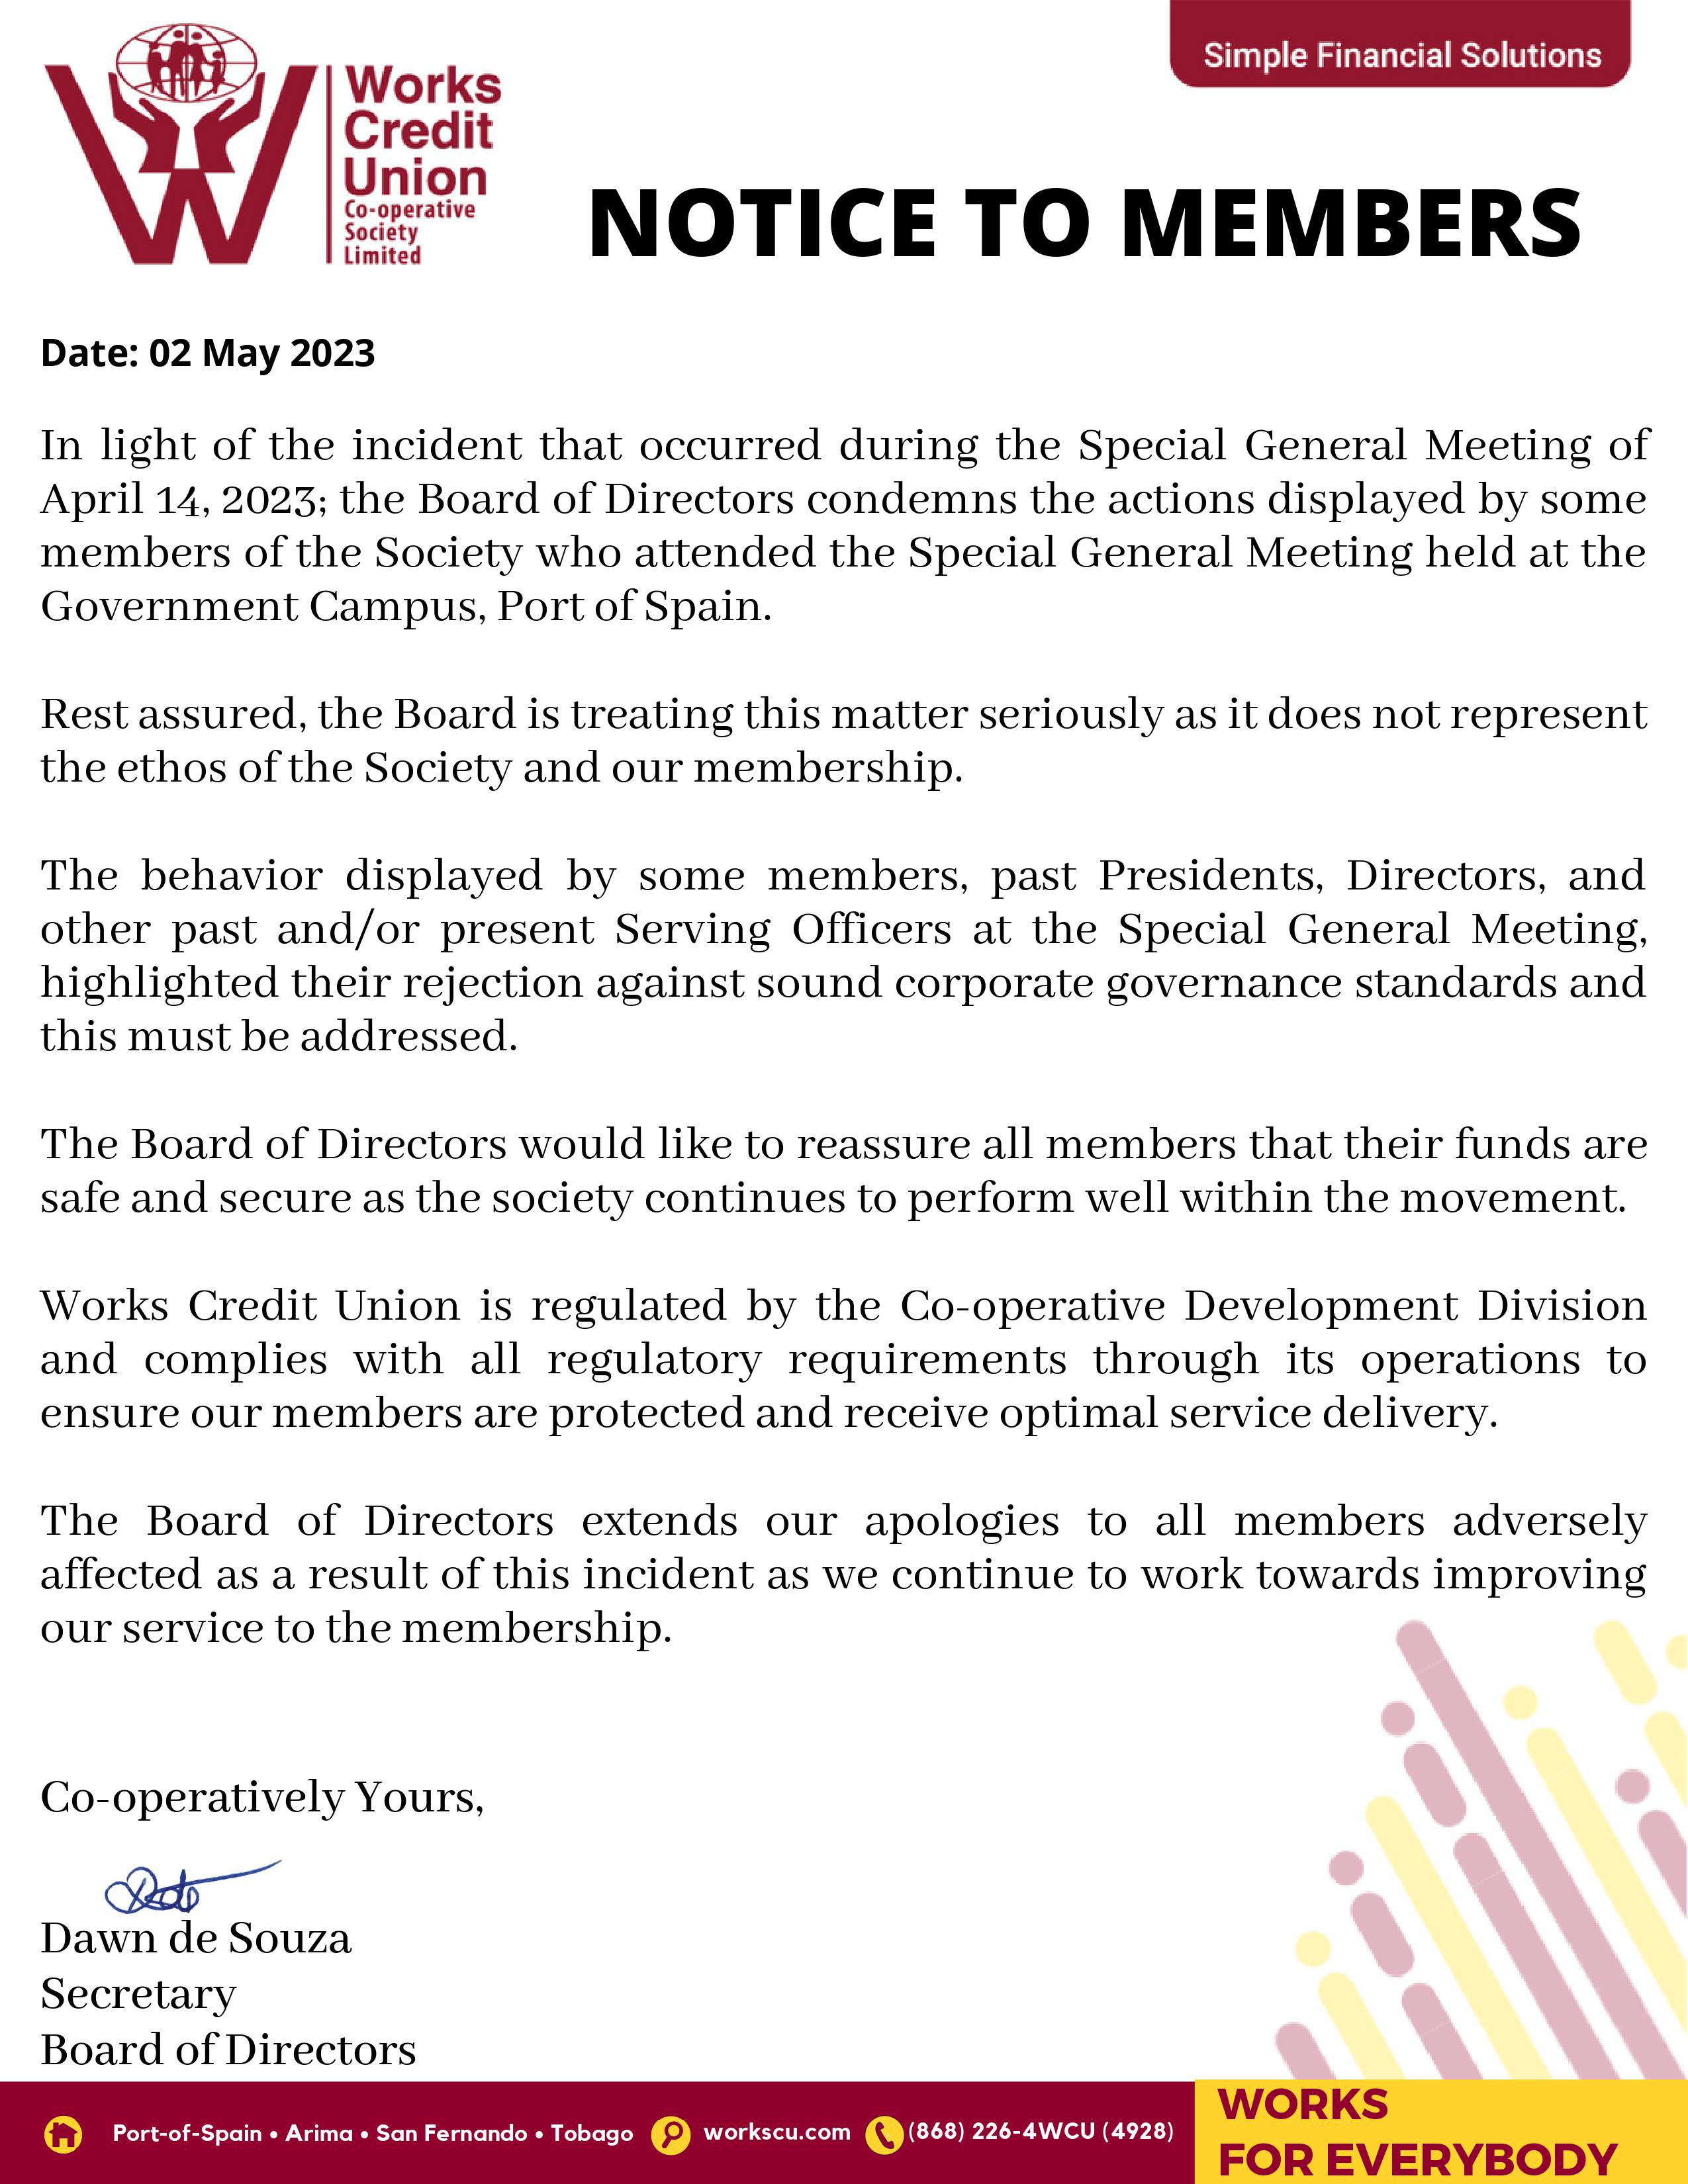 Board of Directors Statement